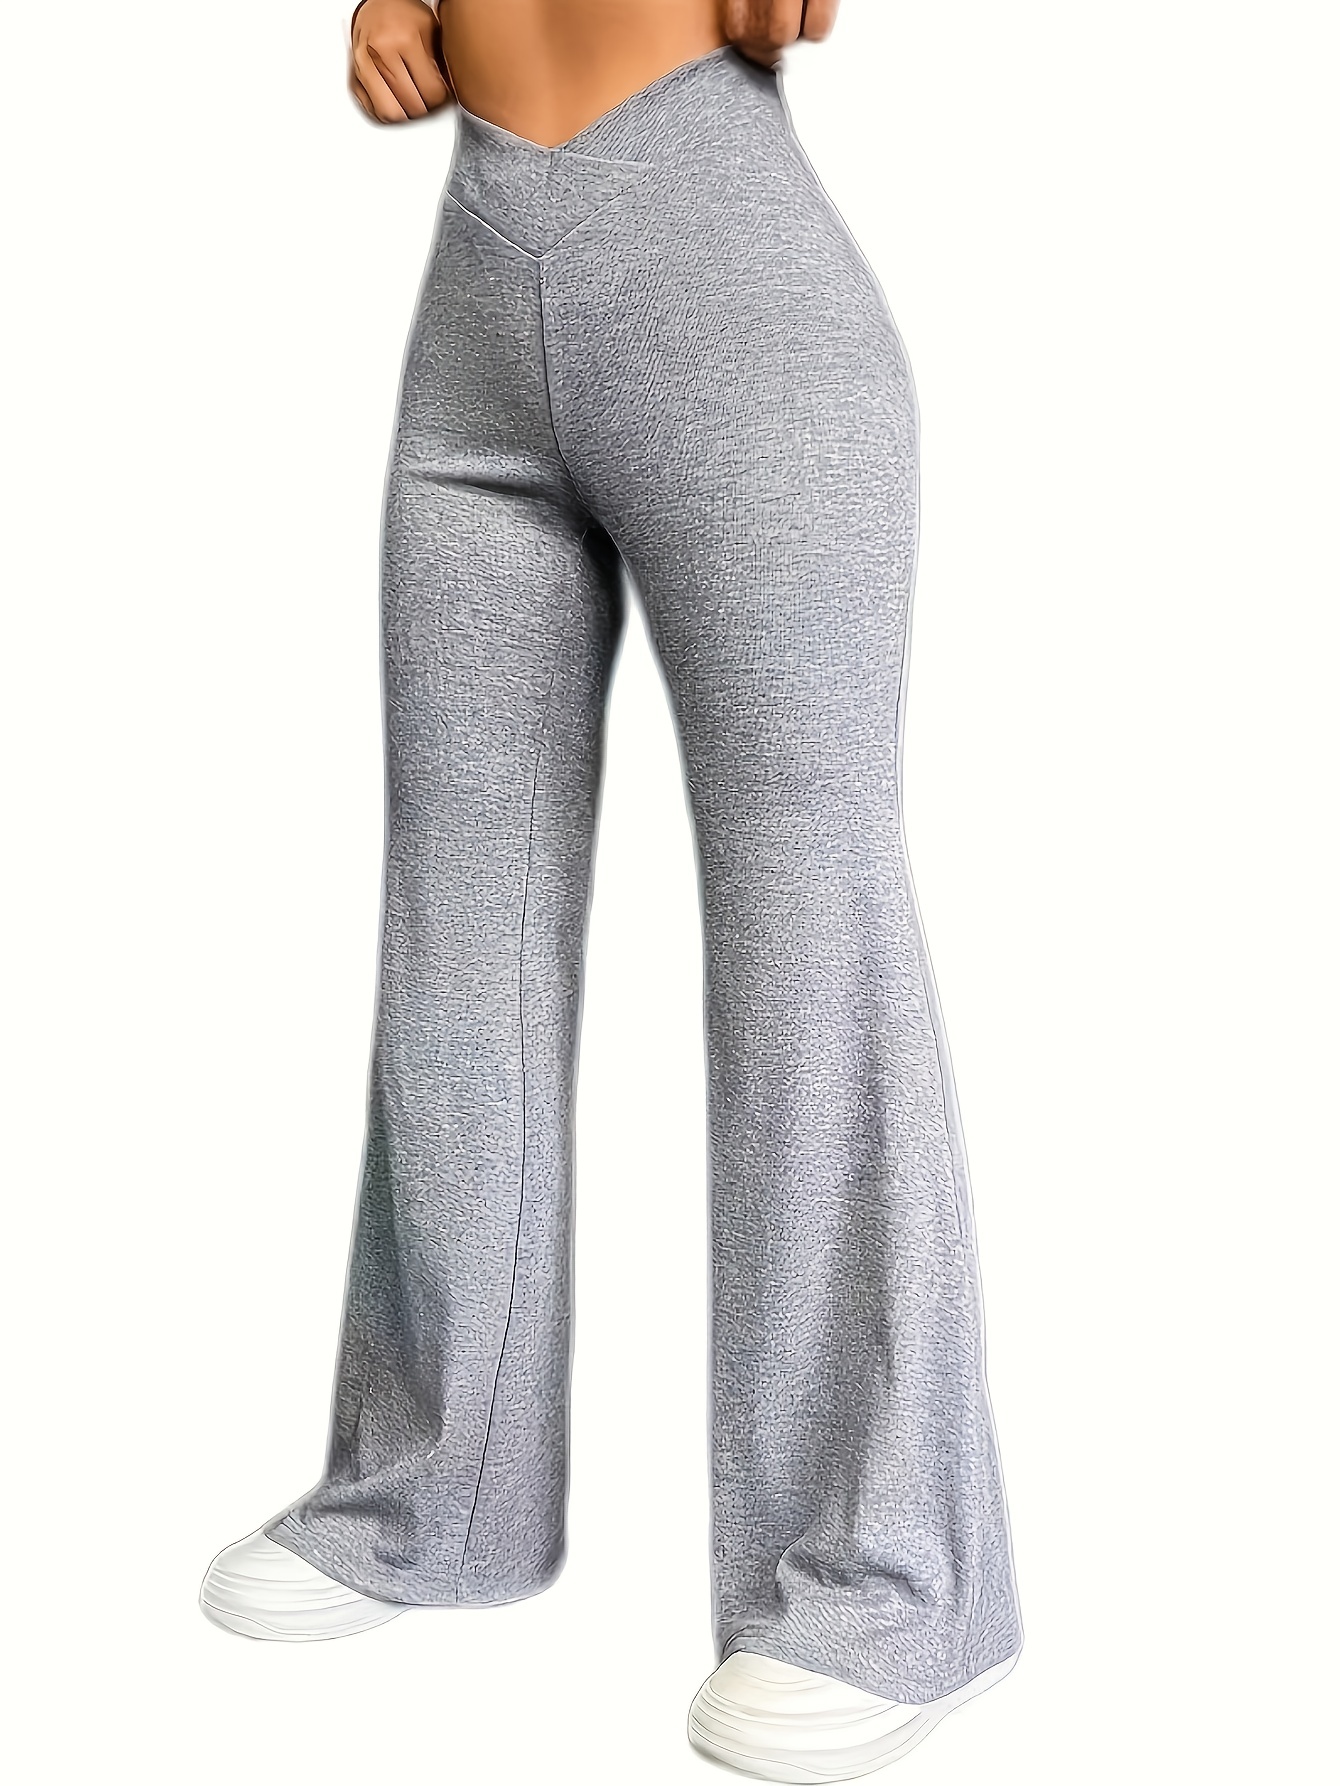 The Kobieta Triple Layer Cuff Straight Leg Yoga Pants; XXS Thru Plus Sized  10X+ - Kobieta Clothing Company